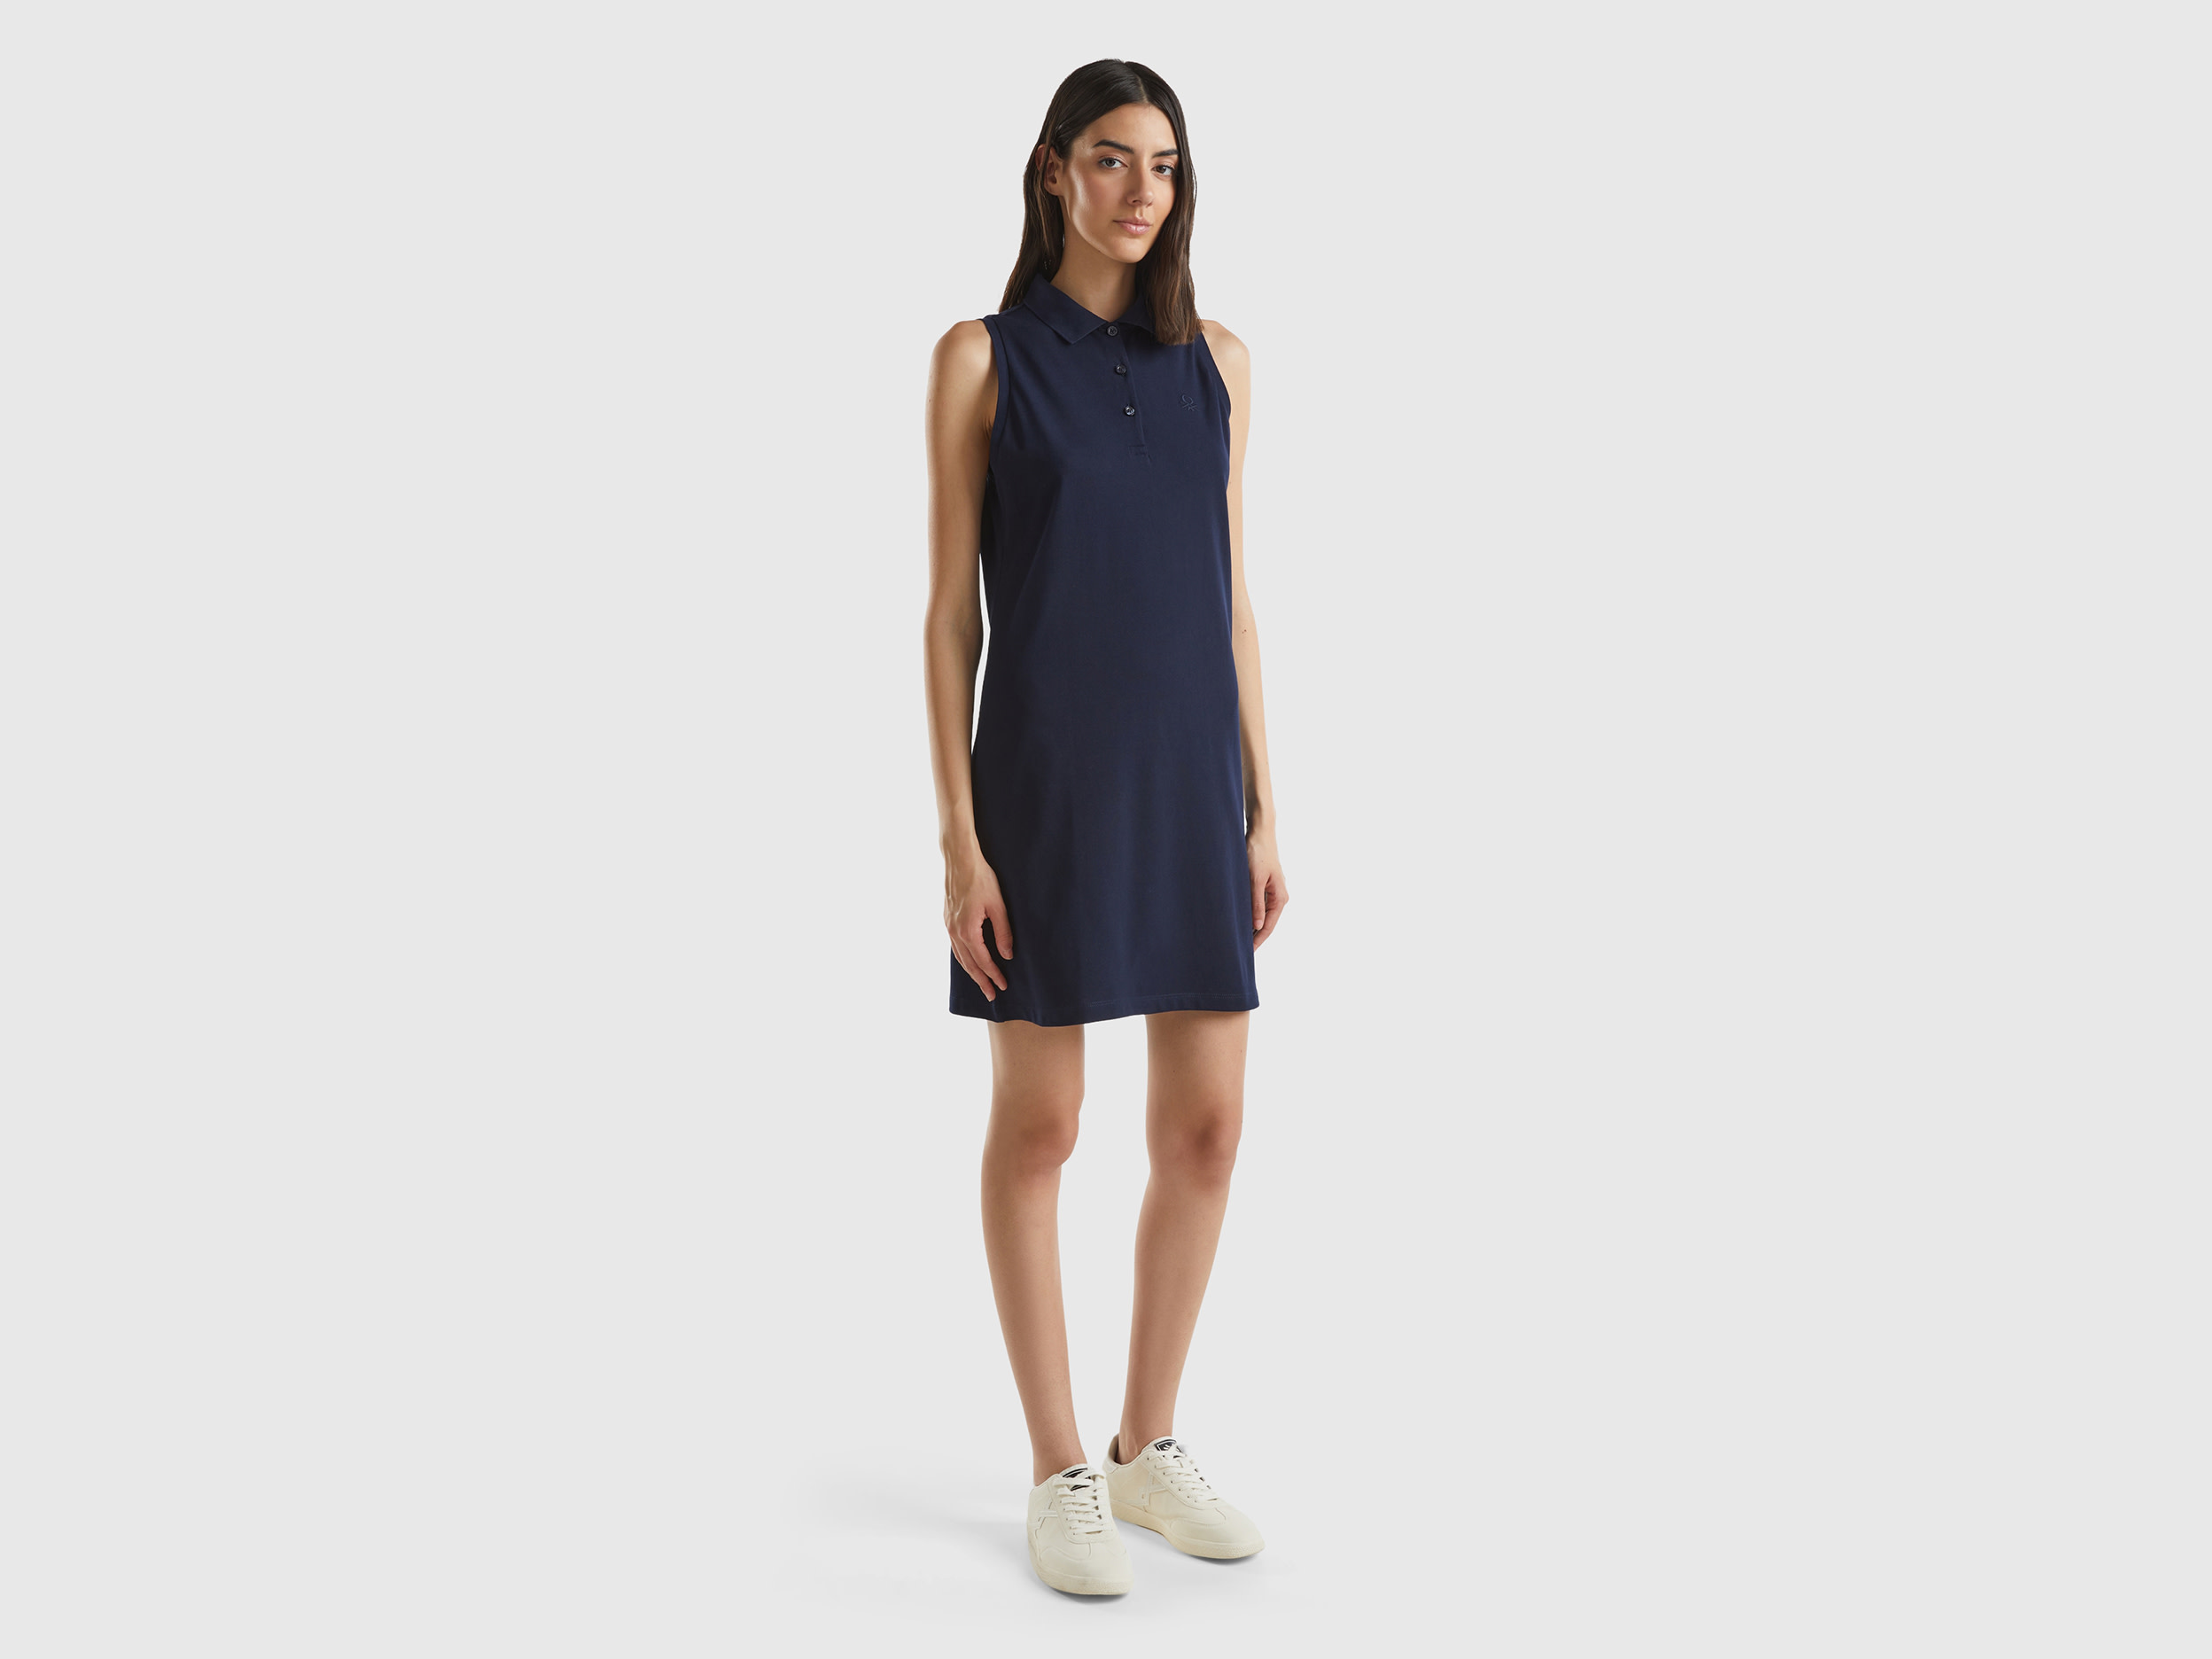 Benetton, Φόρεμα Στυλ Πόλο Μπλε Σκούρο, size L, Σκουρο Μπλε, Γυναικεία